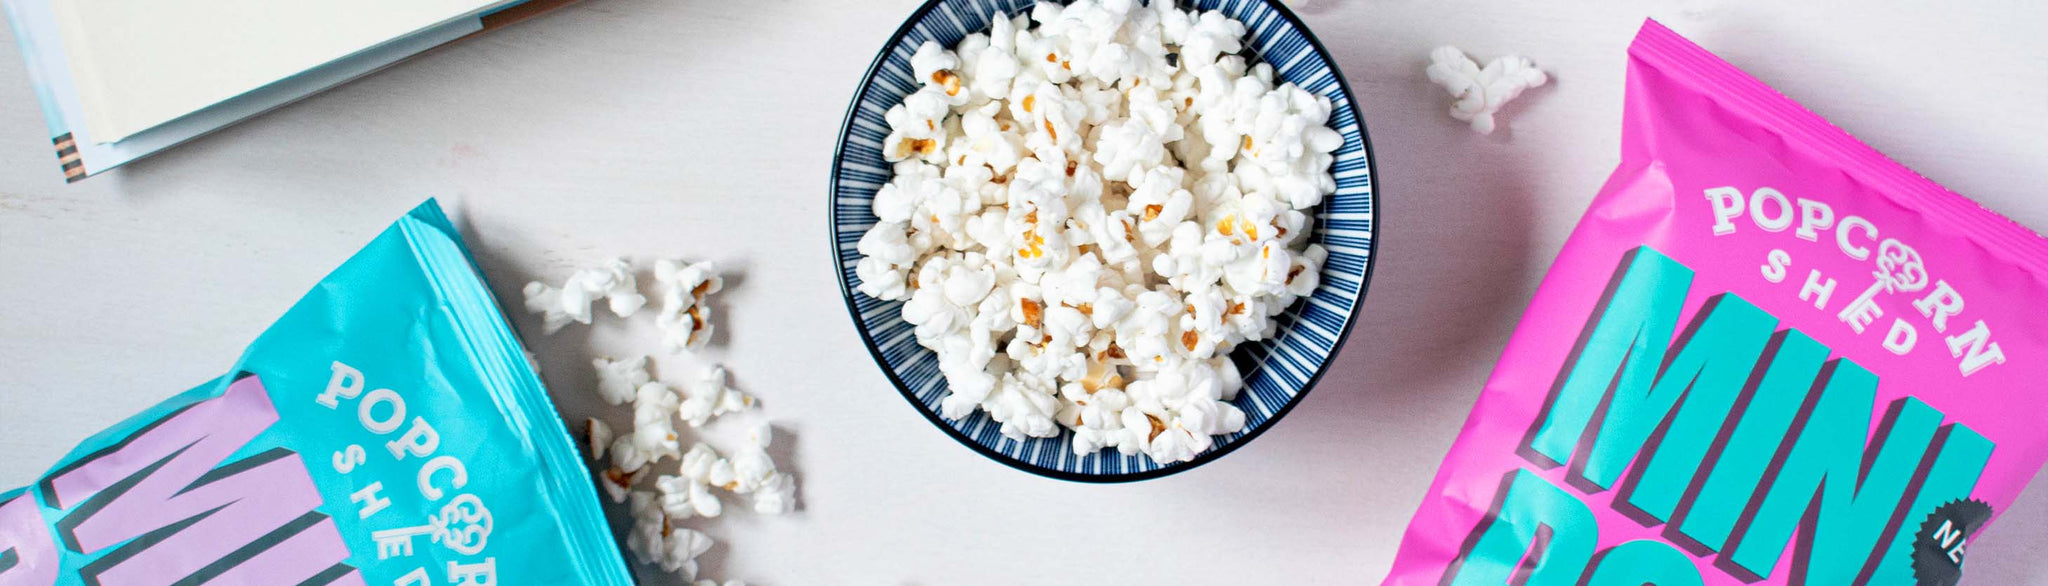 Minipop Vegan Popcorn Popcorn Shed